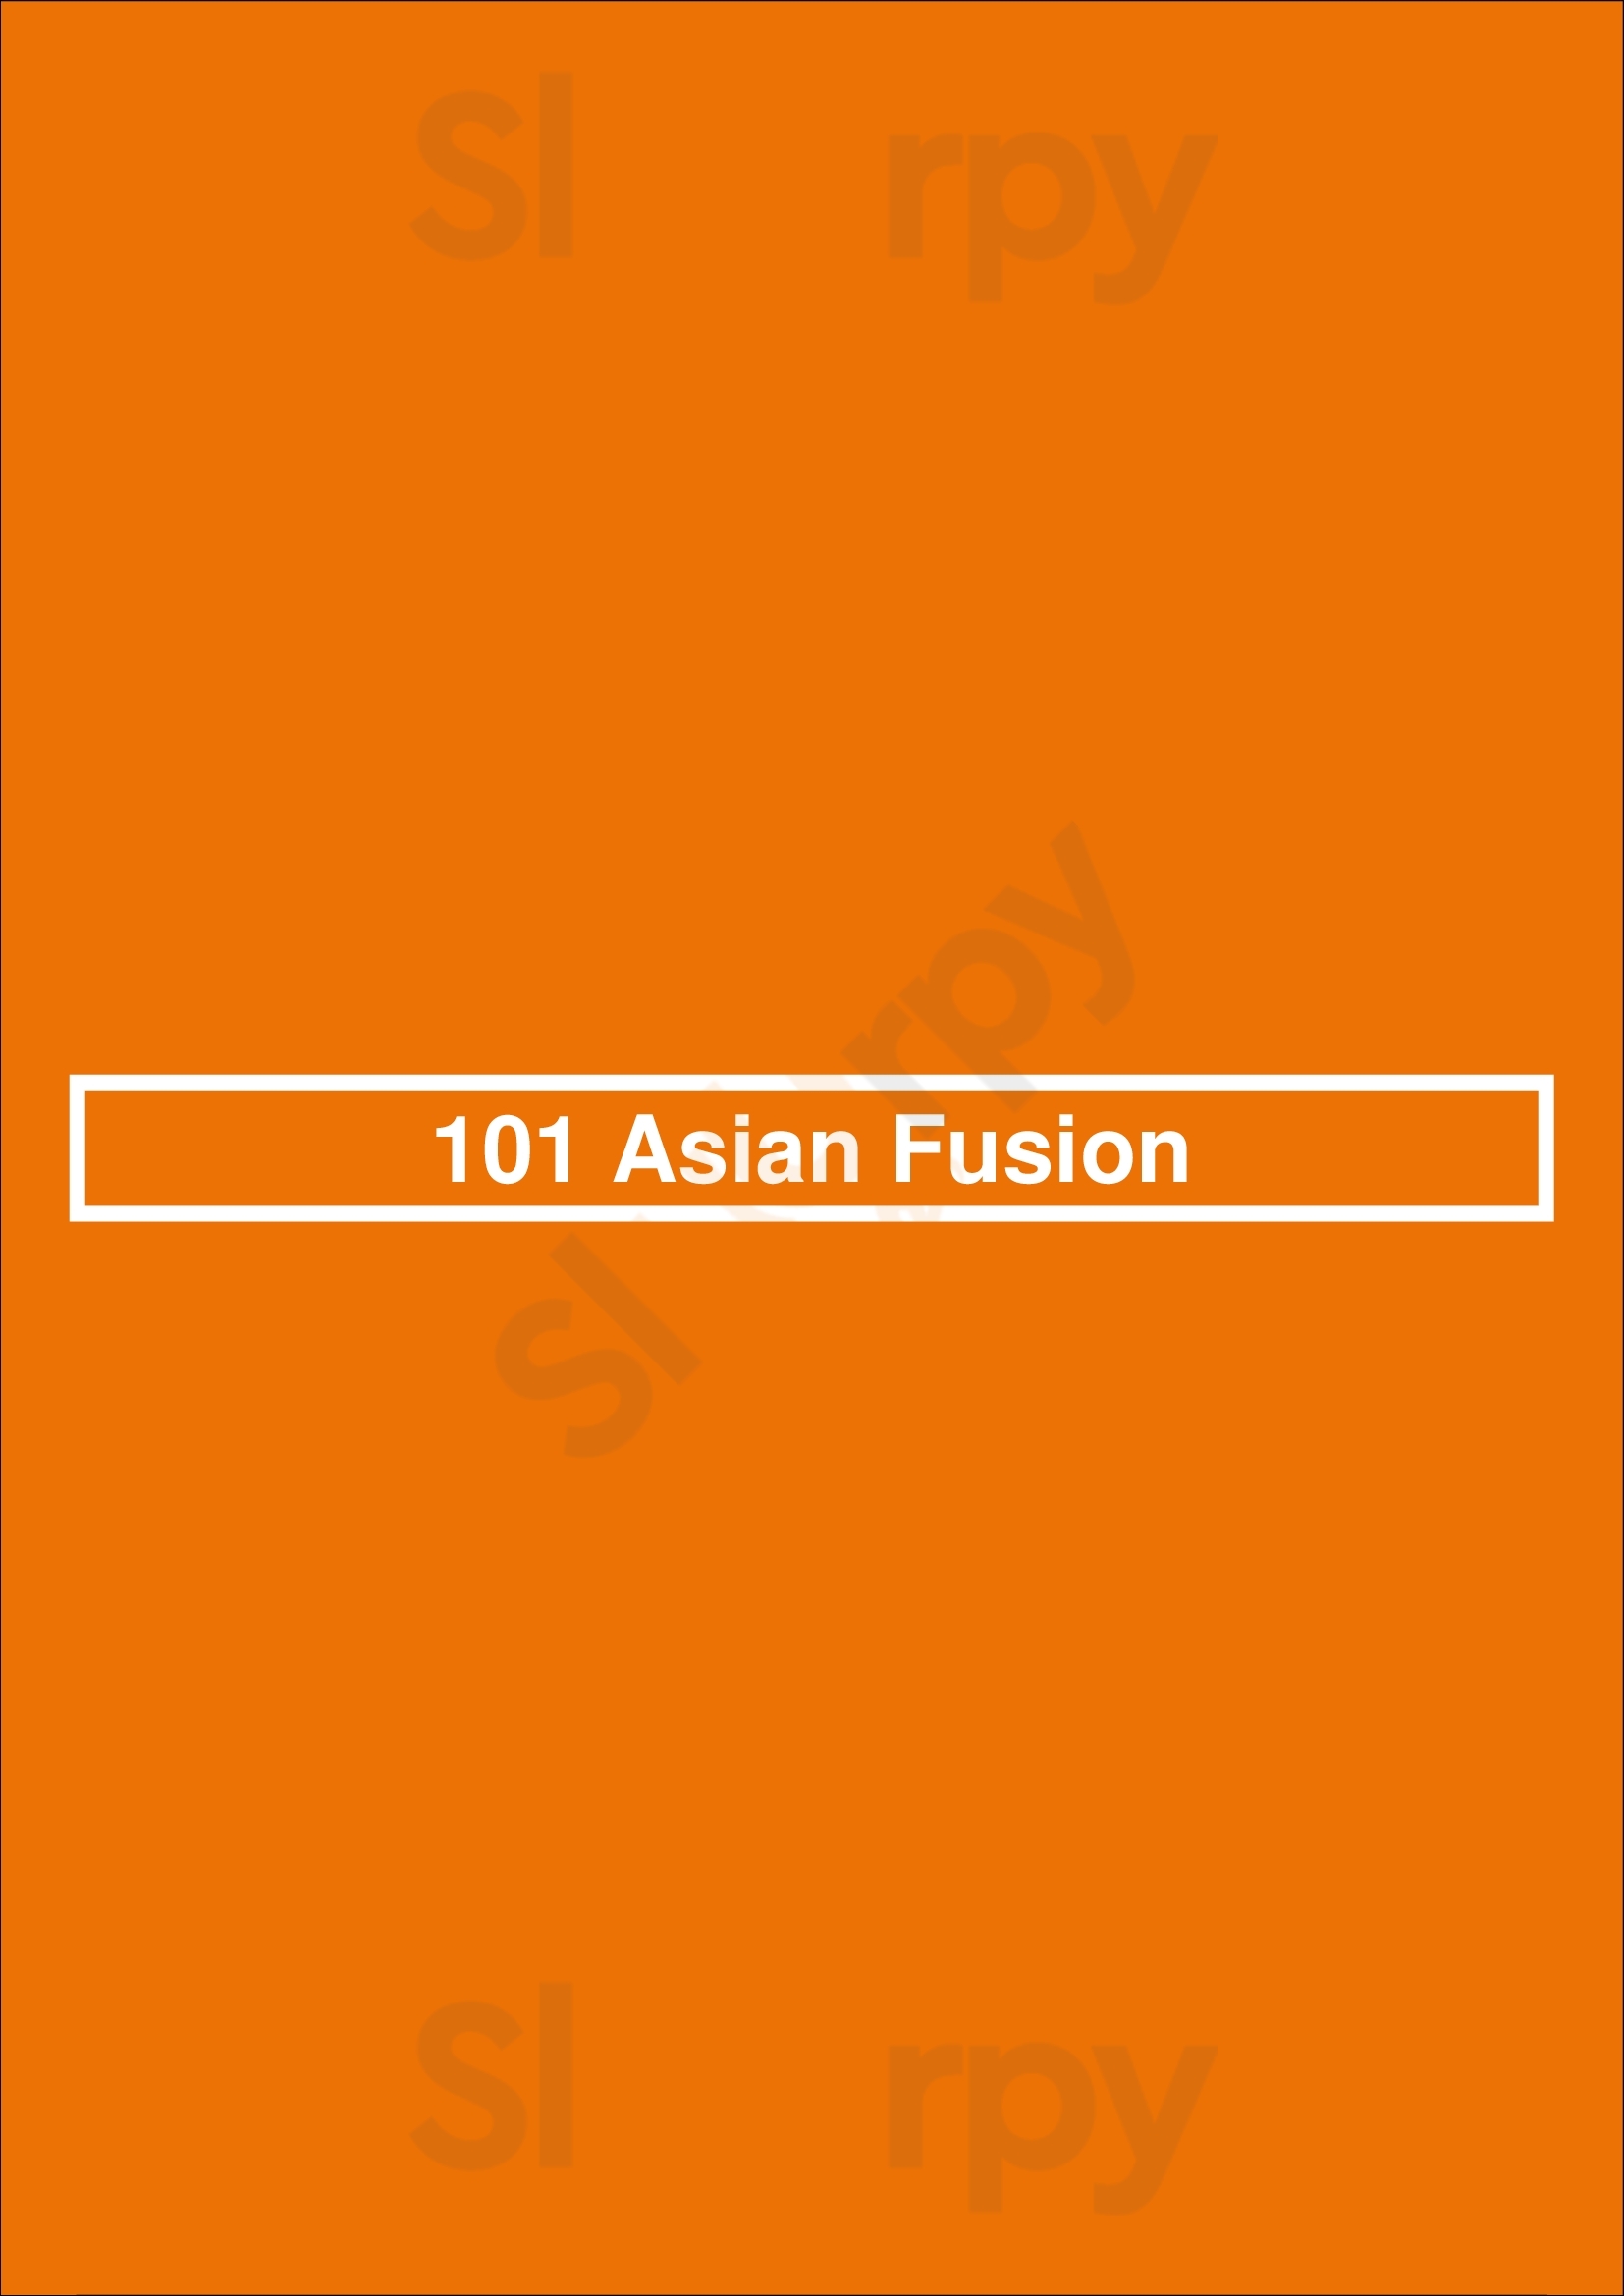 101 Asian Fusion Denver Menu - 1